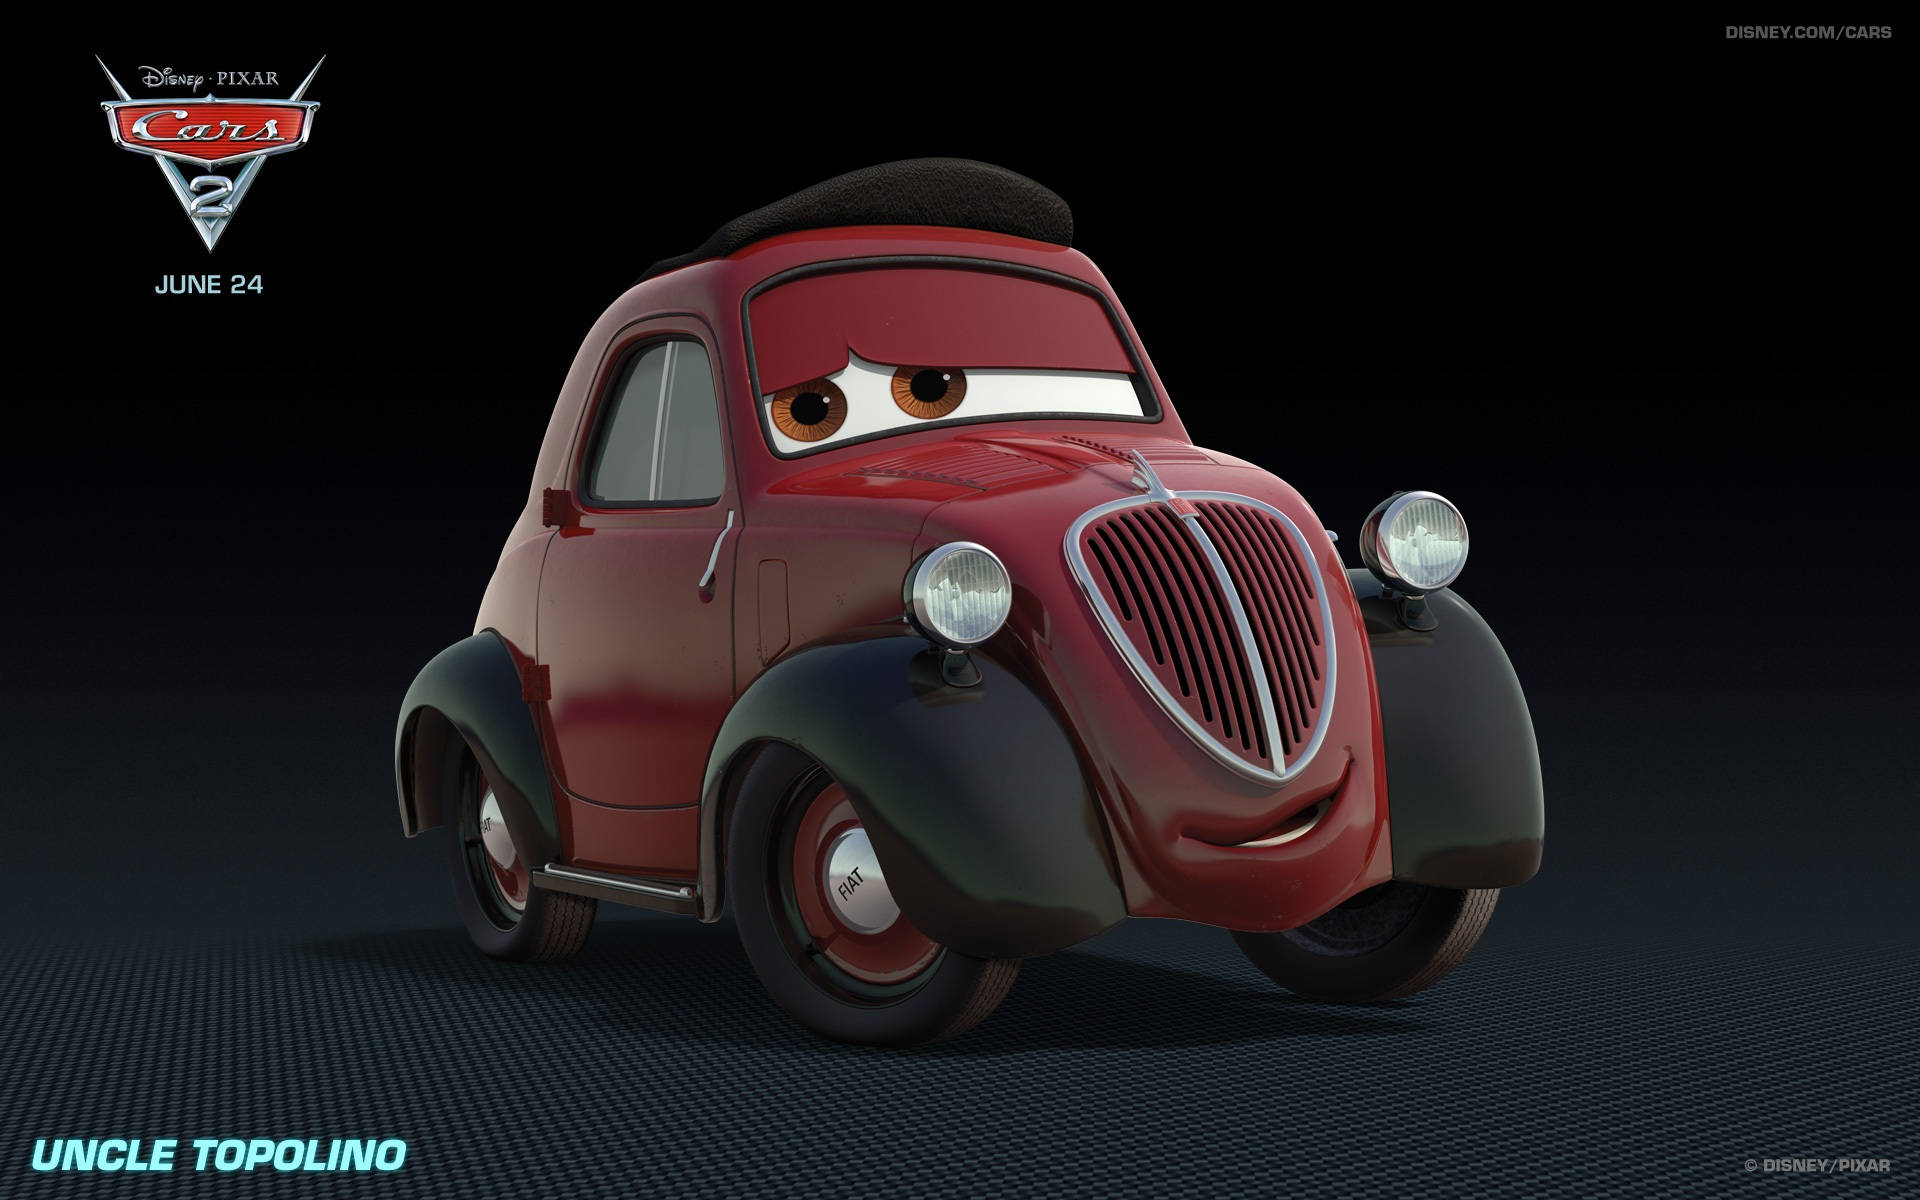 Disney Pixar Uncle Topolino Cars 2 Picture